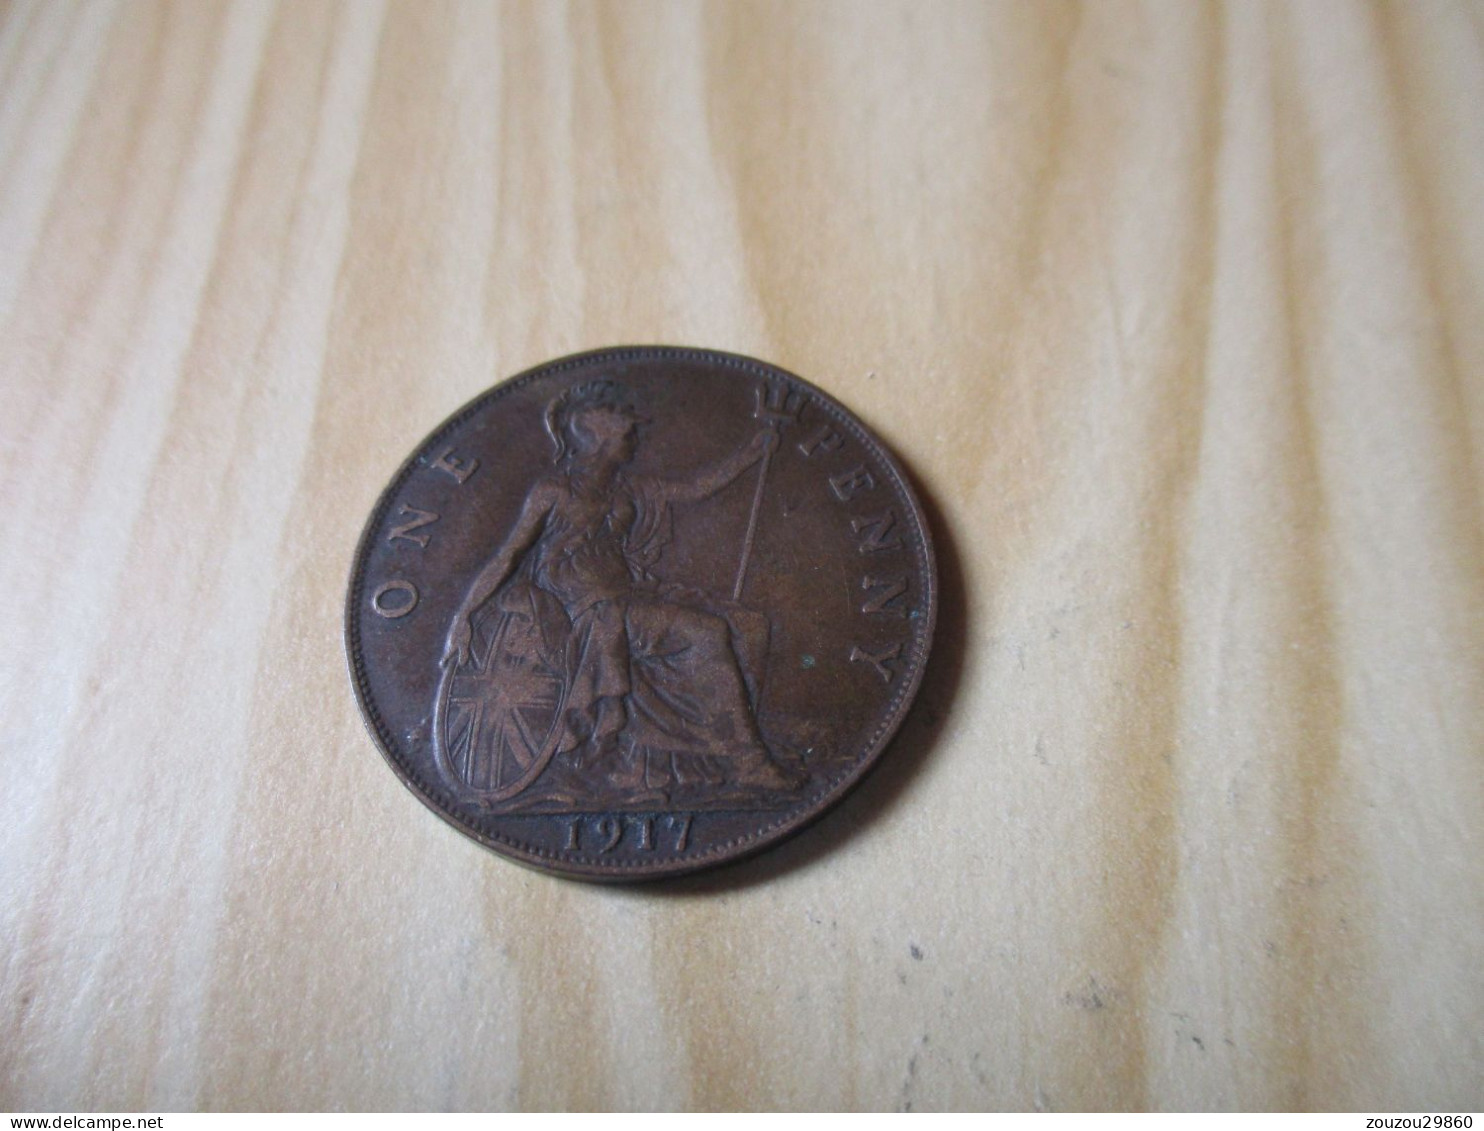 Grande-Bretagne - One Penny George V 1917.N°590. - D. 1 Penny